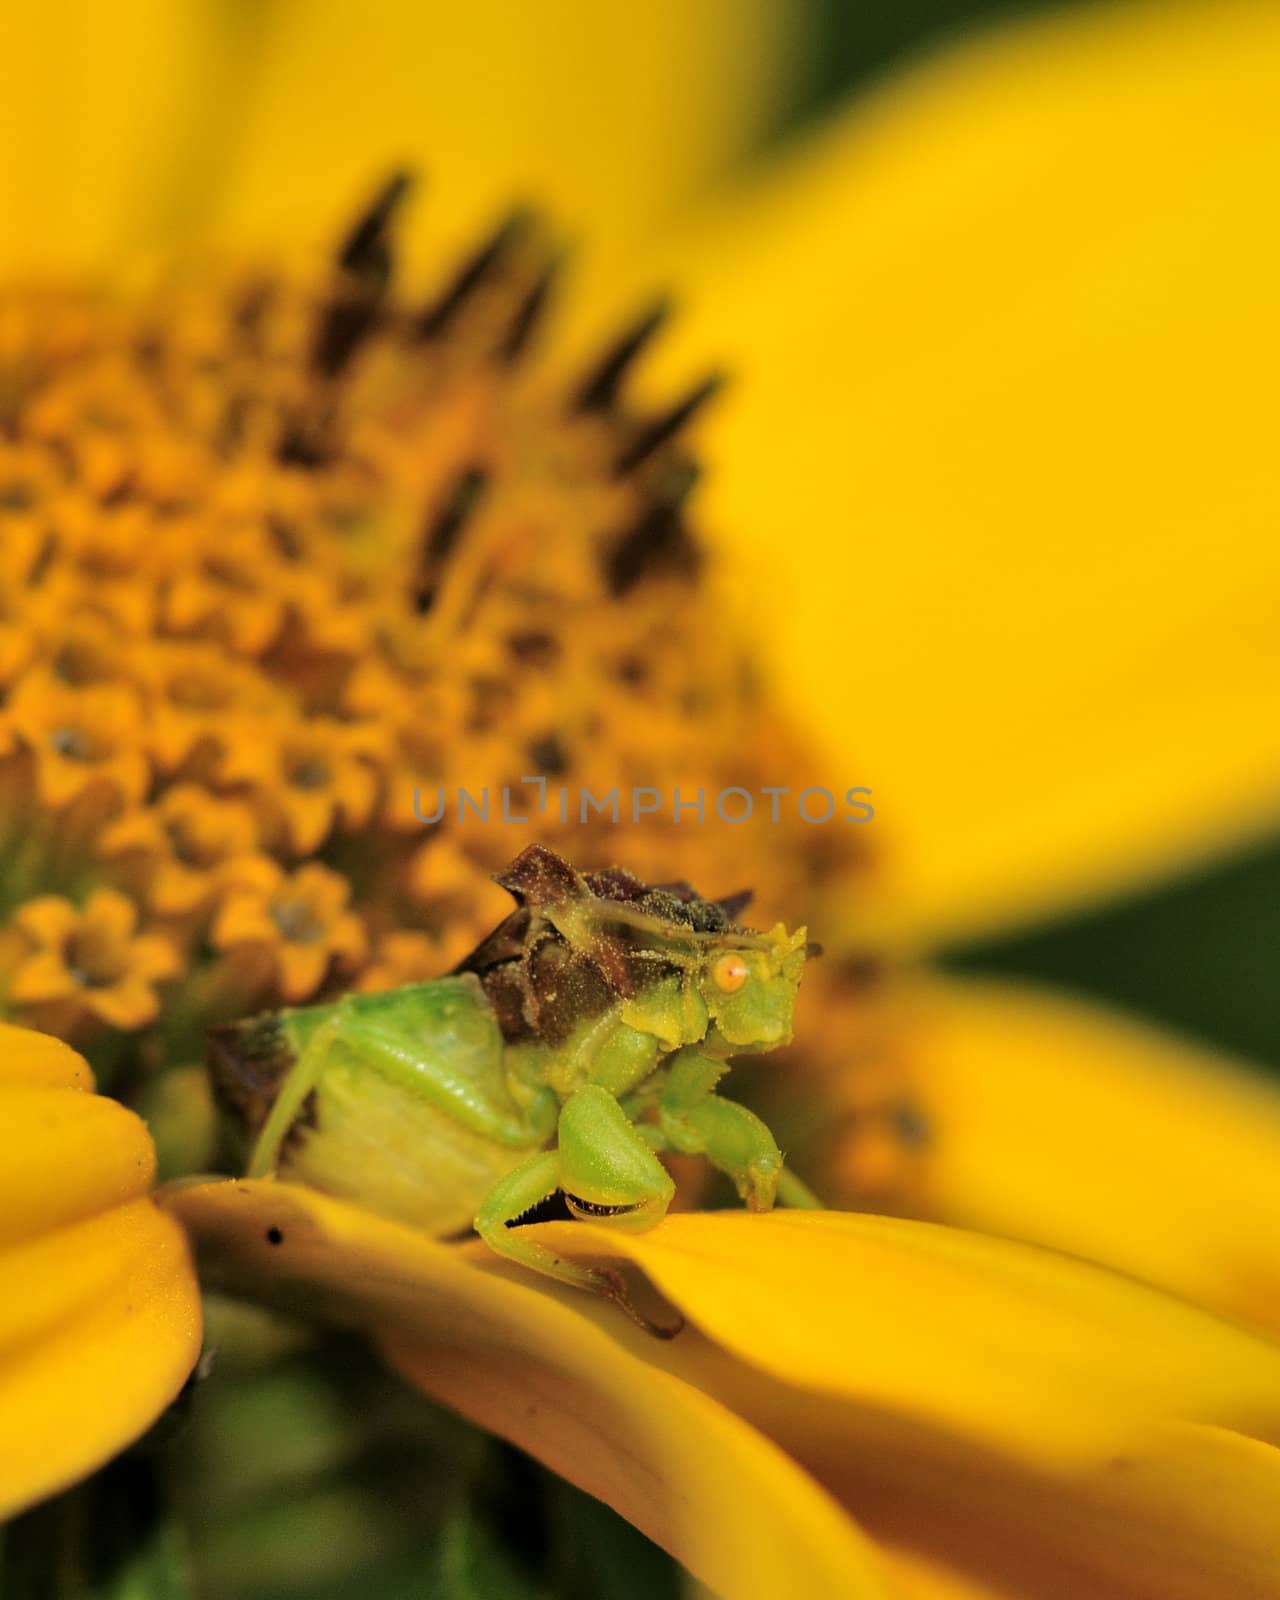 An Ambush Bug perched on a yellow flower waiting on prey.